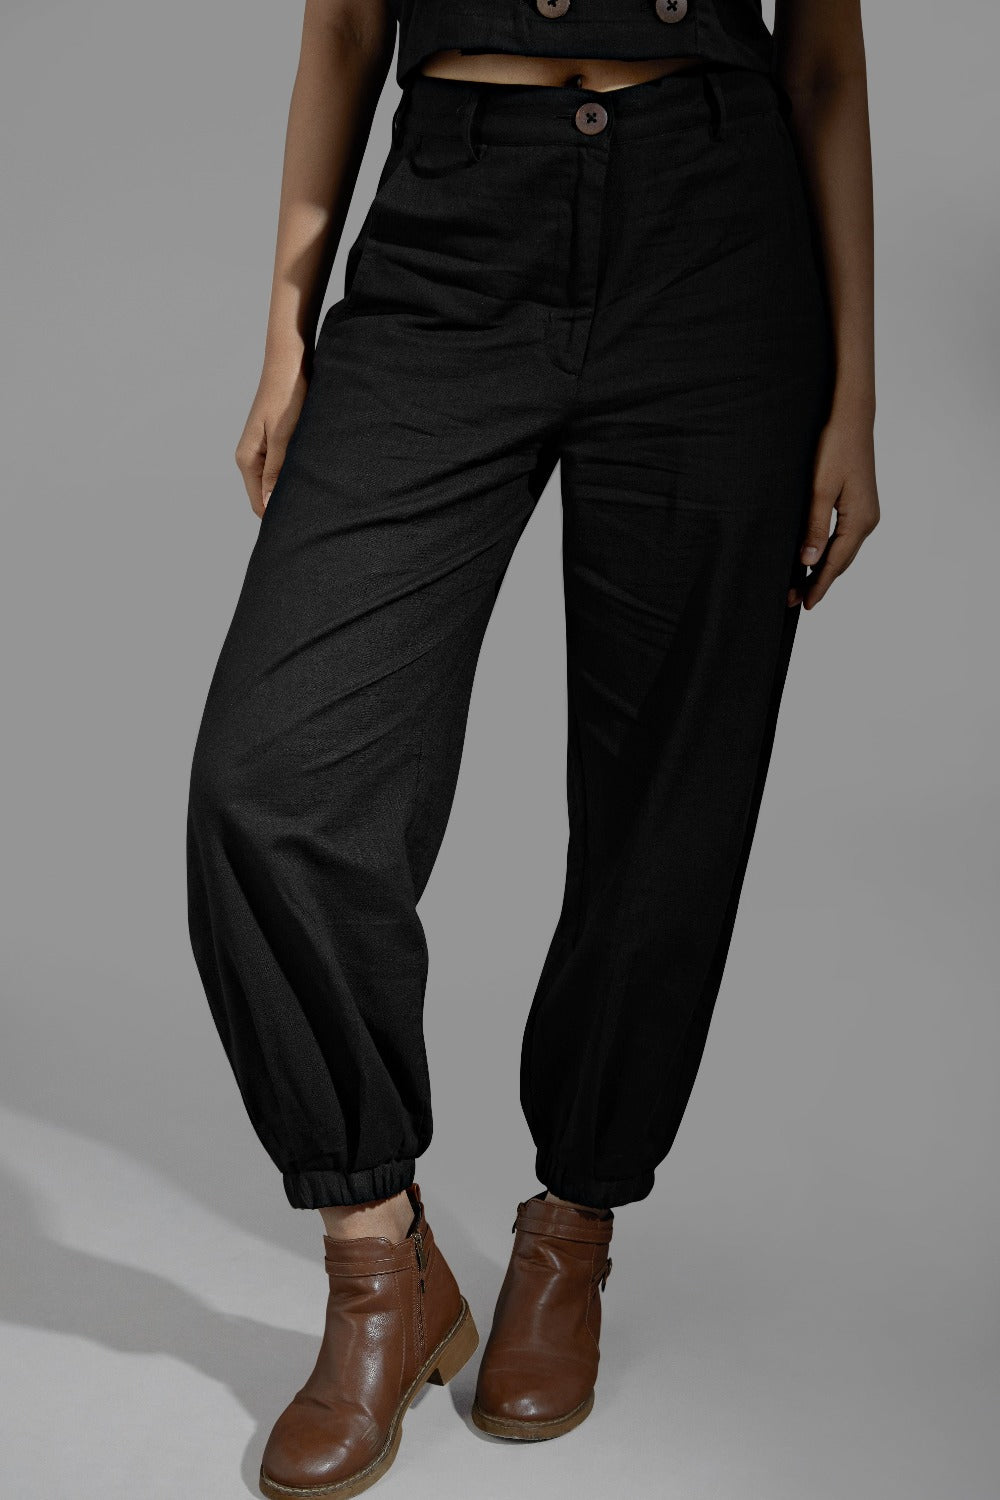 Buy Black Track Pants for Women by BLACK PANTHER Online  Ajiocom